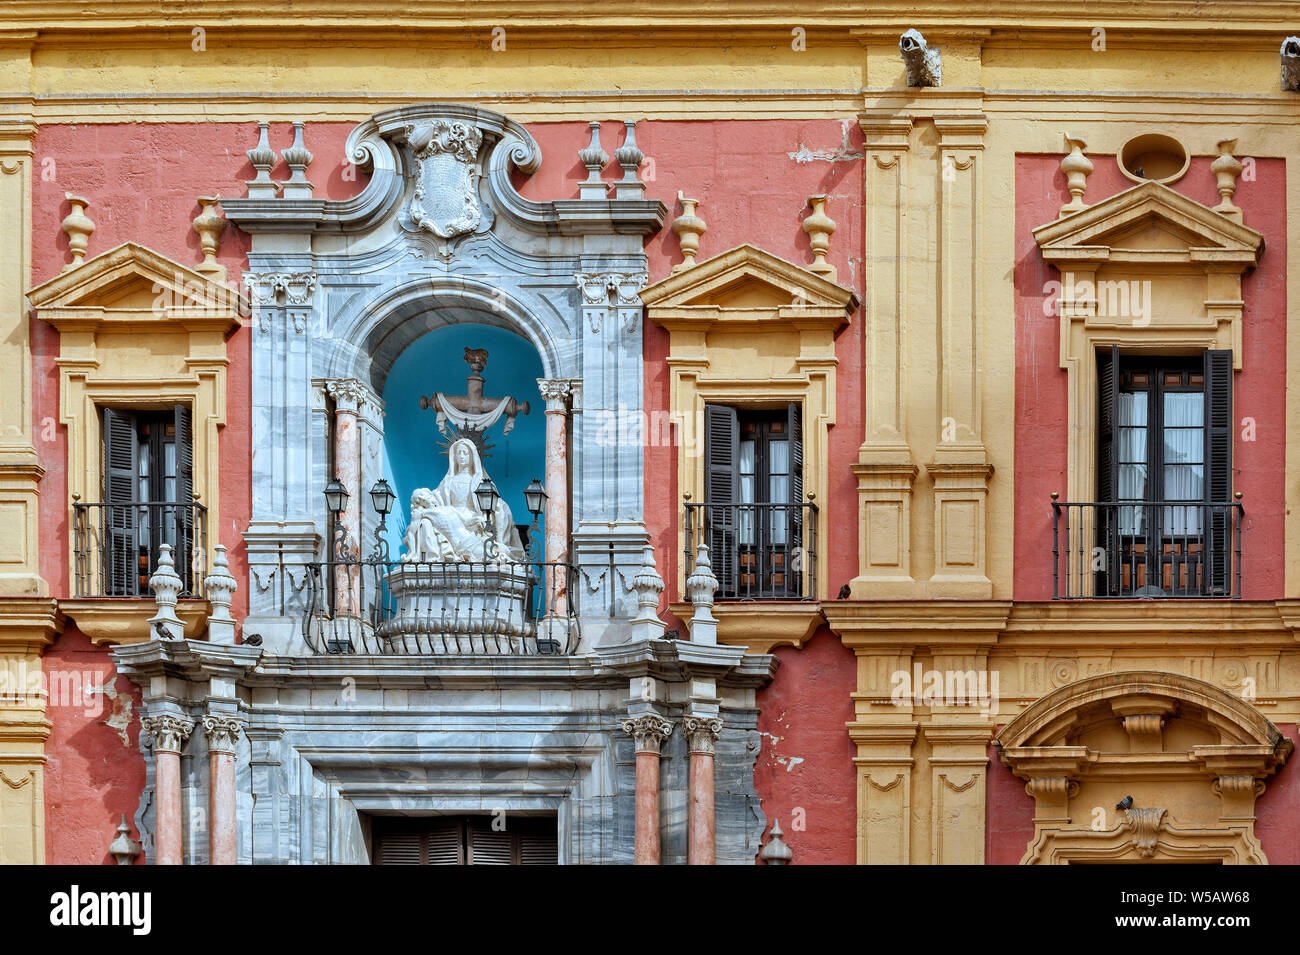 Episcopal Palace in Plaza del Obispo - one of most important late baroque architecture in Malaga, Spain Stock Photo